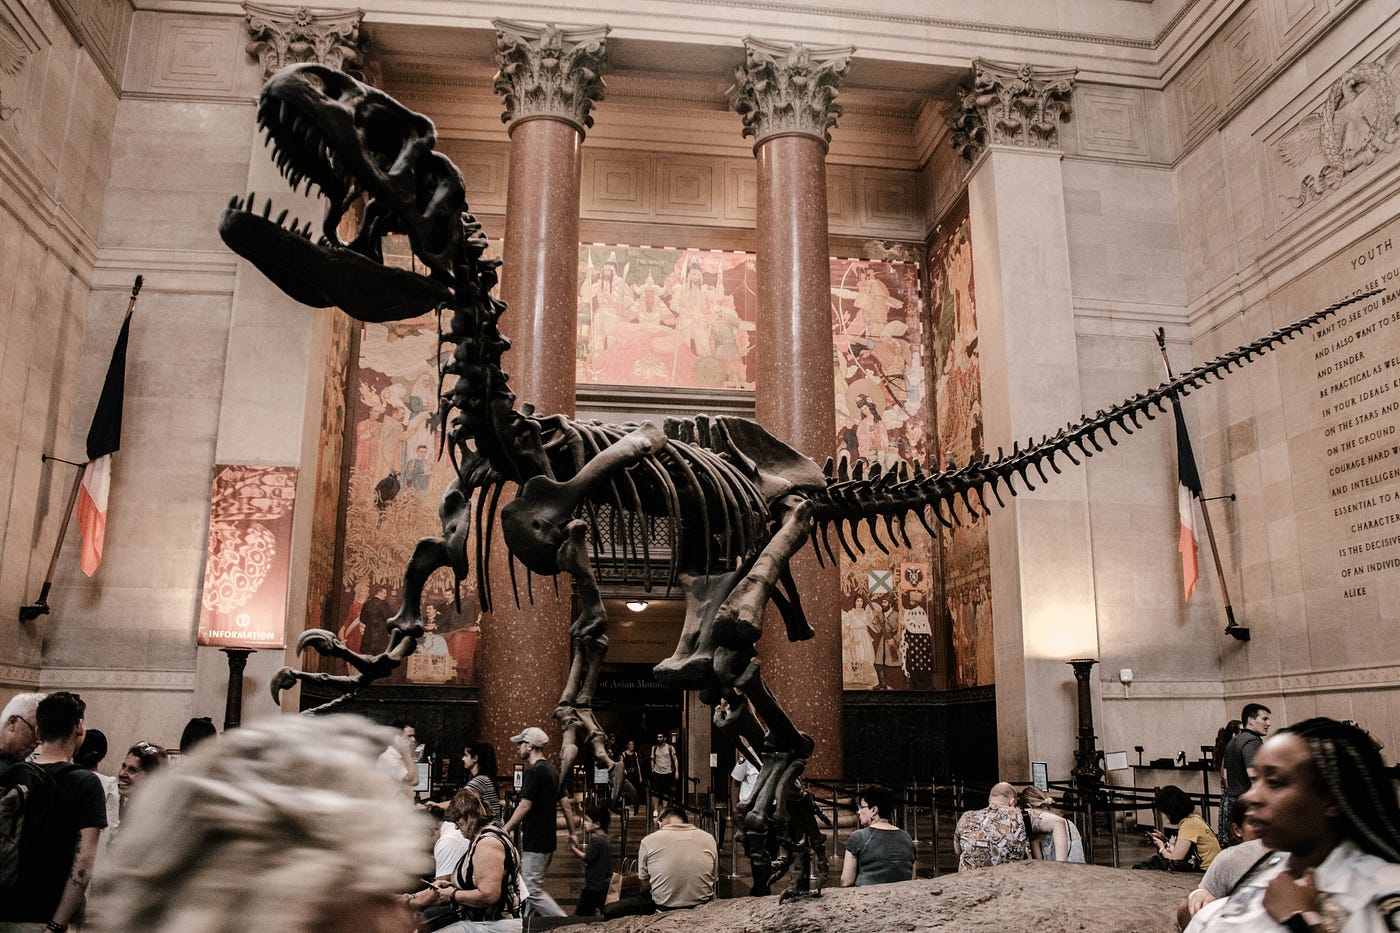 American Museum of Natural History: The 5 Halls - Carltonaut's Travel Tips